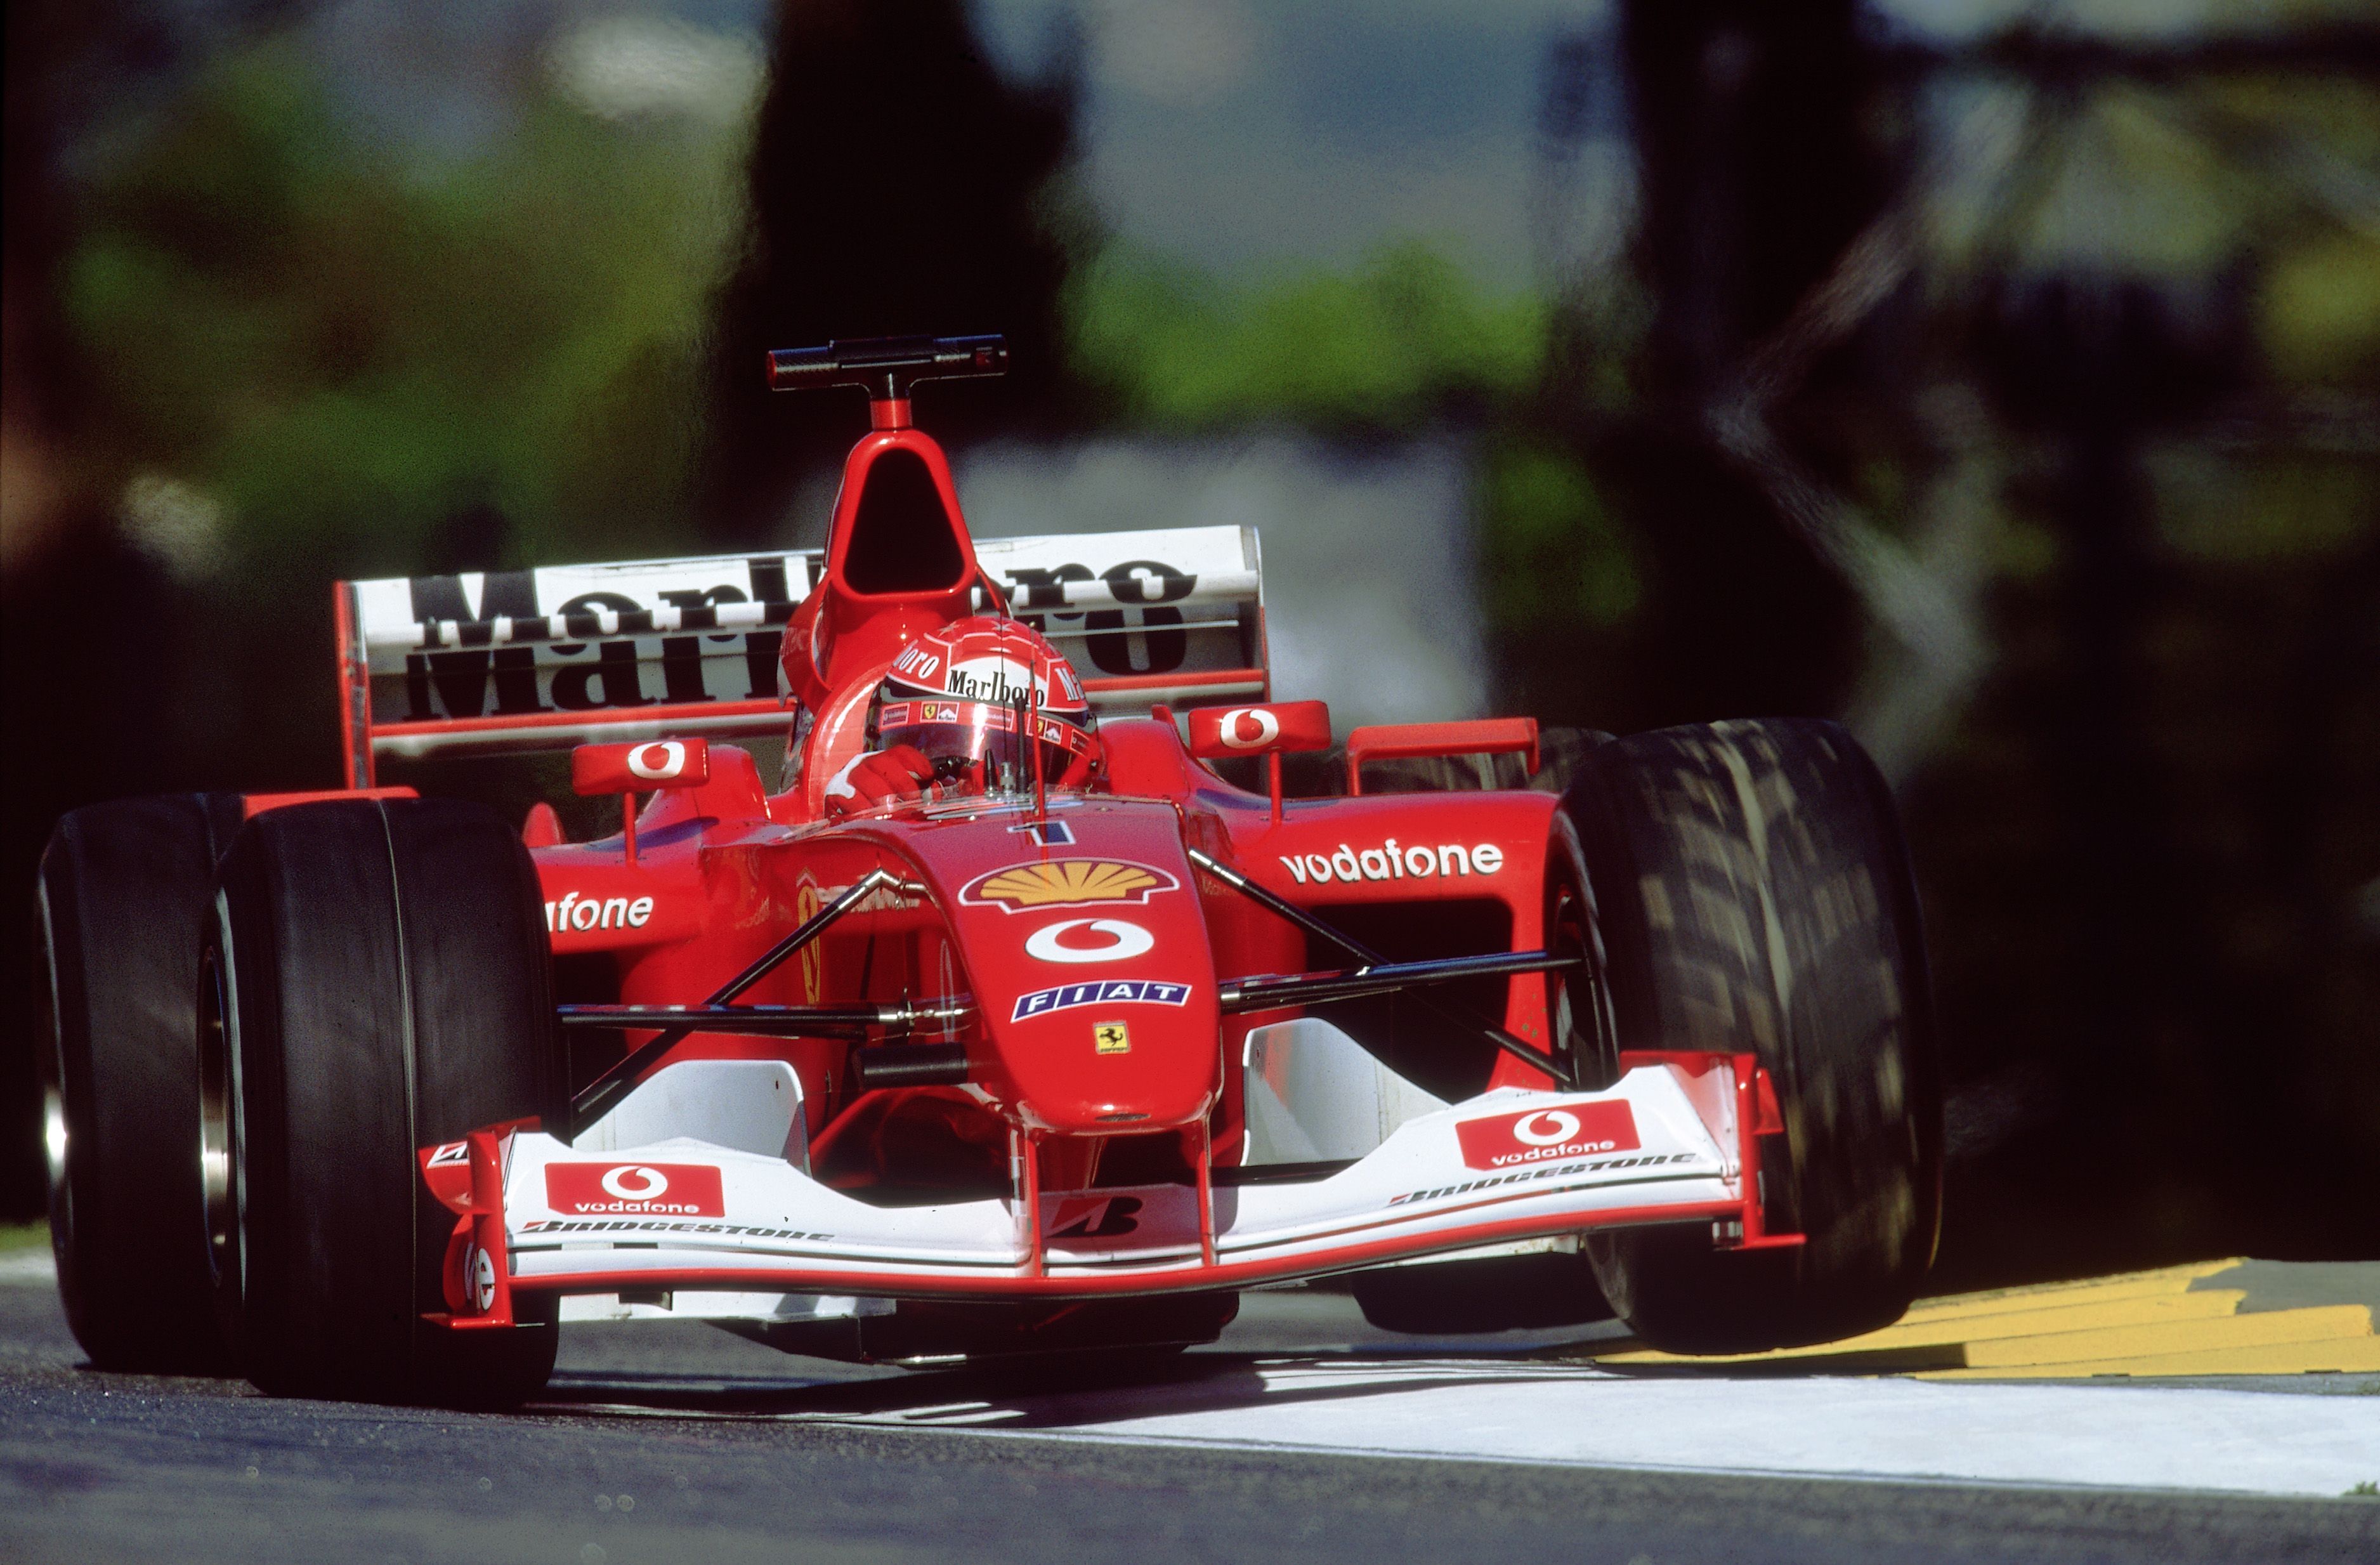 Ferrari F2002 2002 Michael Schumacher F1 1:43 Formula 1 Auto